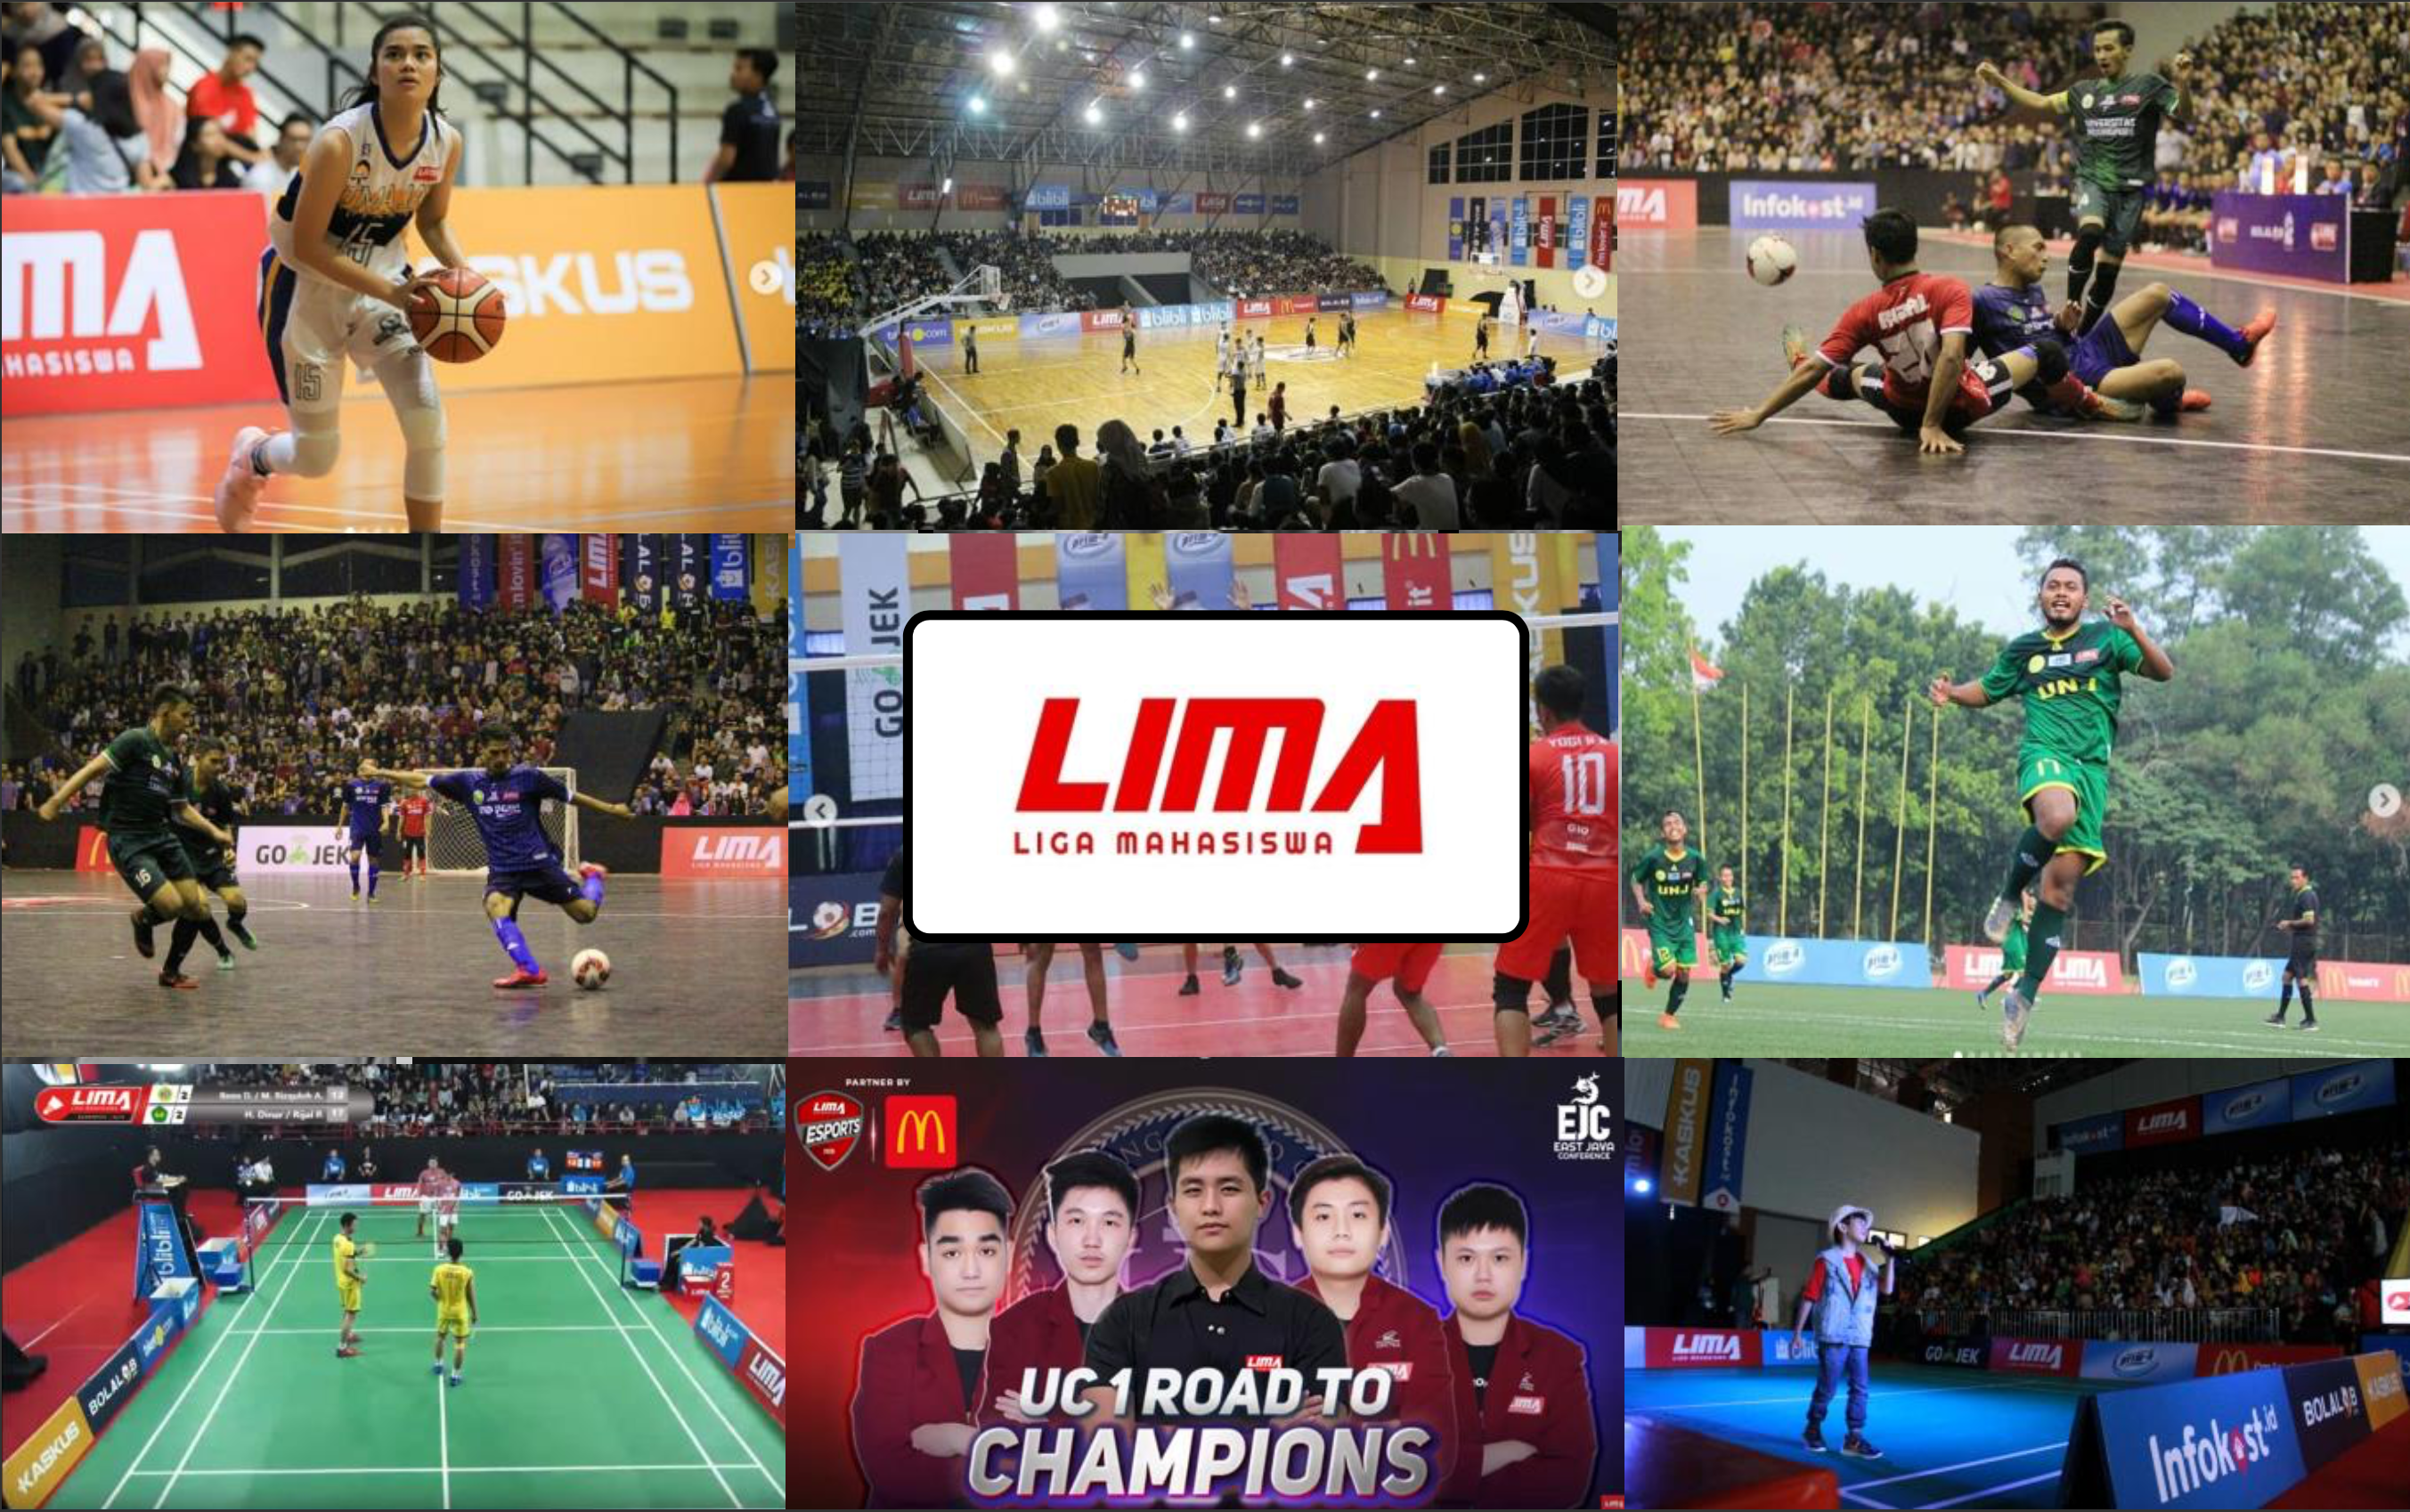 //www.specializedsportsservices.com/wp-content/uploads/2021/09/Liga-Mahasiswa-Indonesia.png